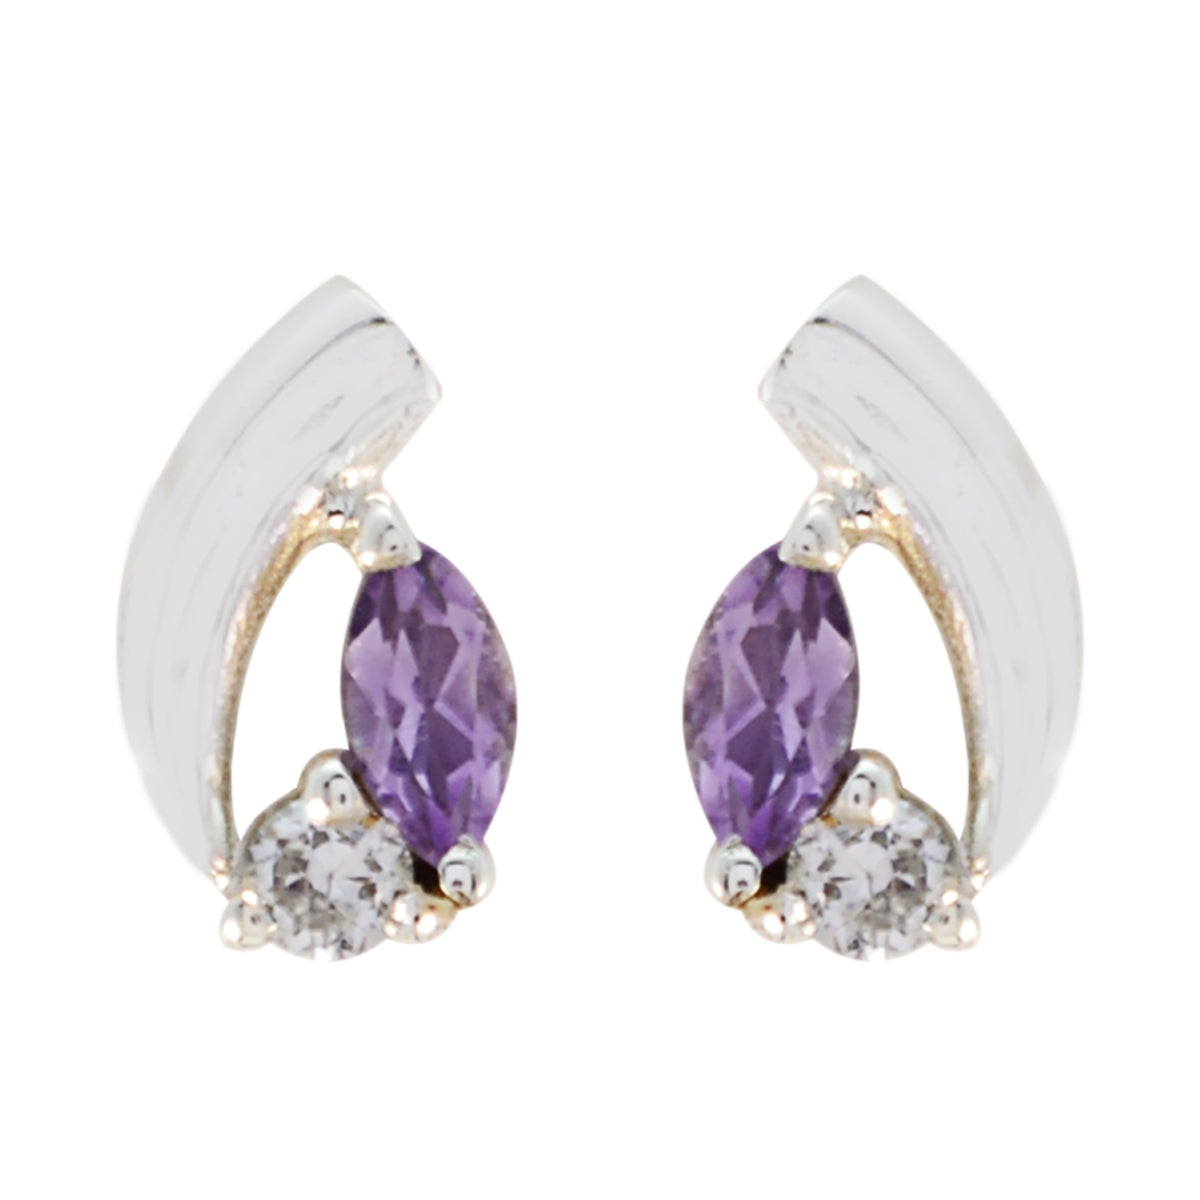 Riyo Natural Gemstone marquise Faceted Purple Amethyst Silver Earrings christmas gifts